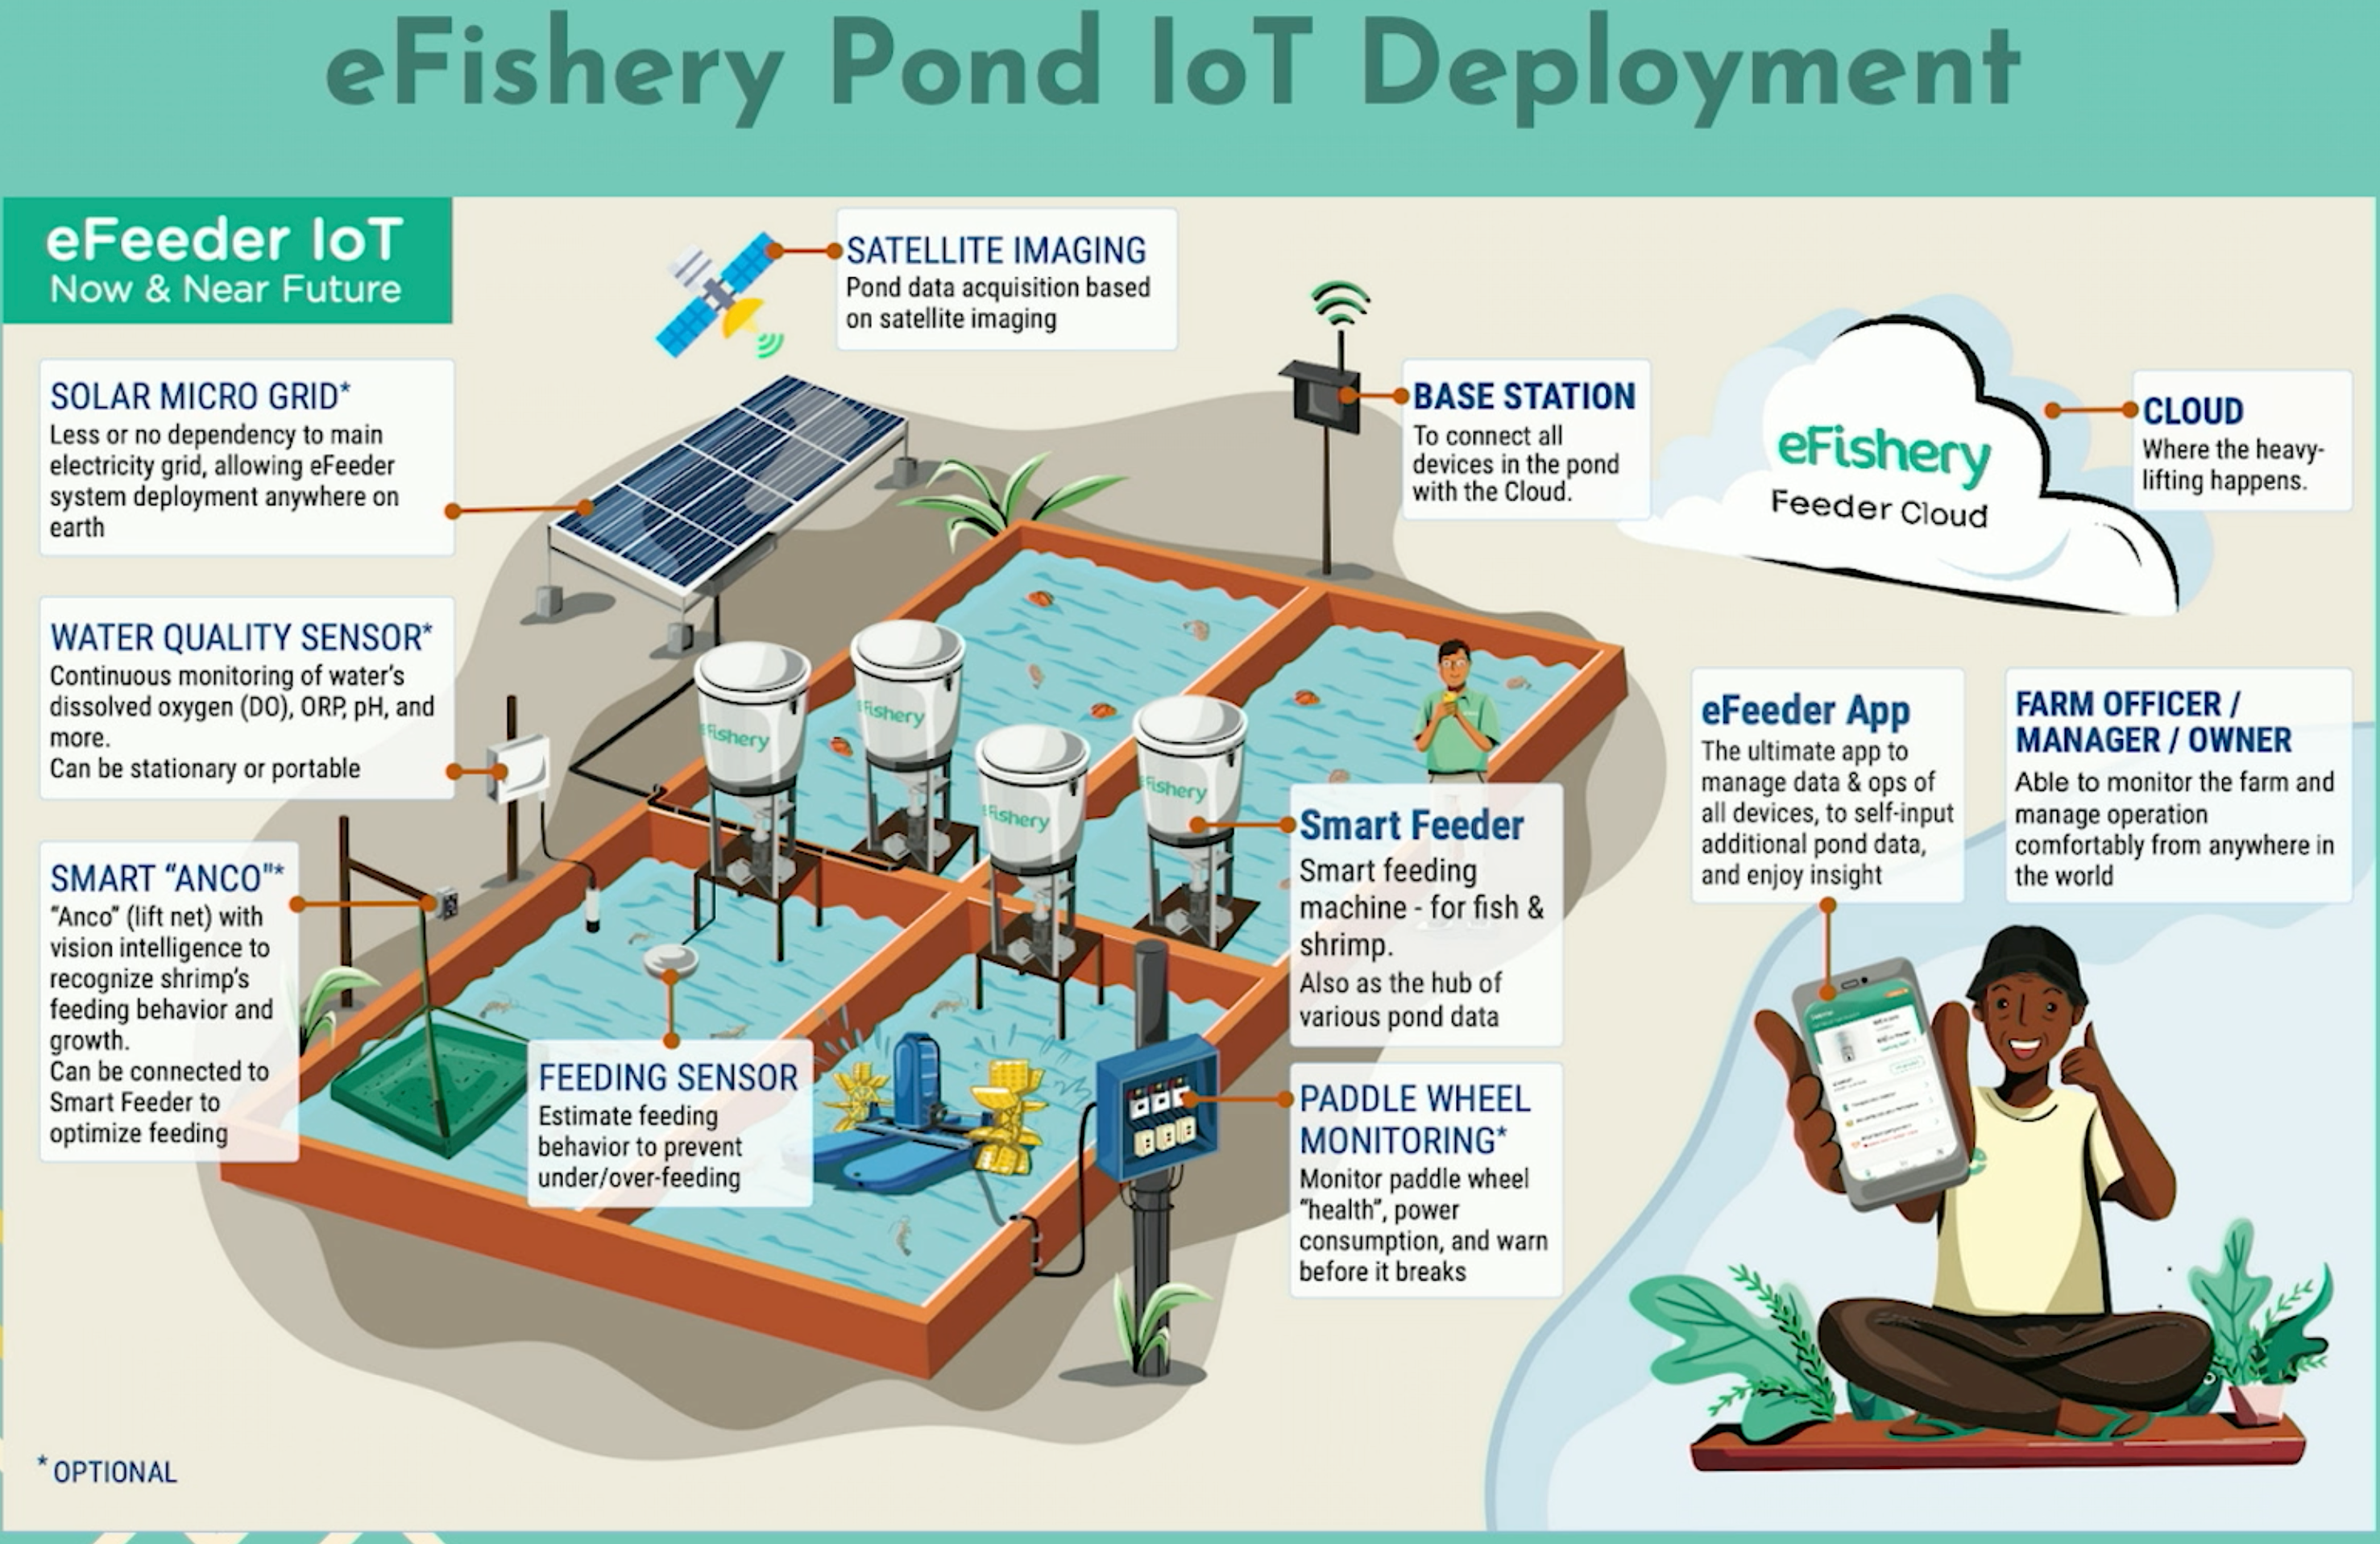 efishery's pond IoT deployment